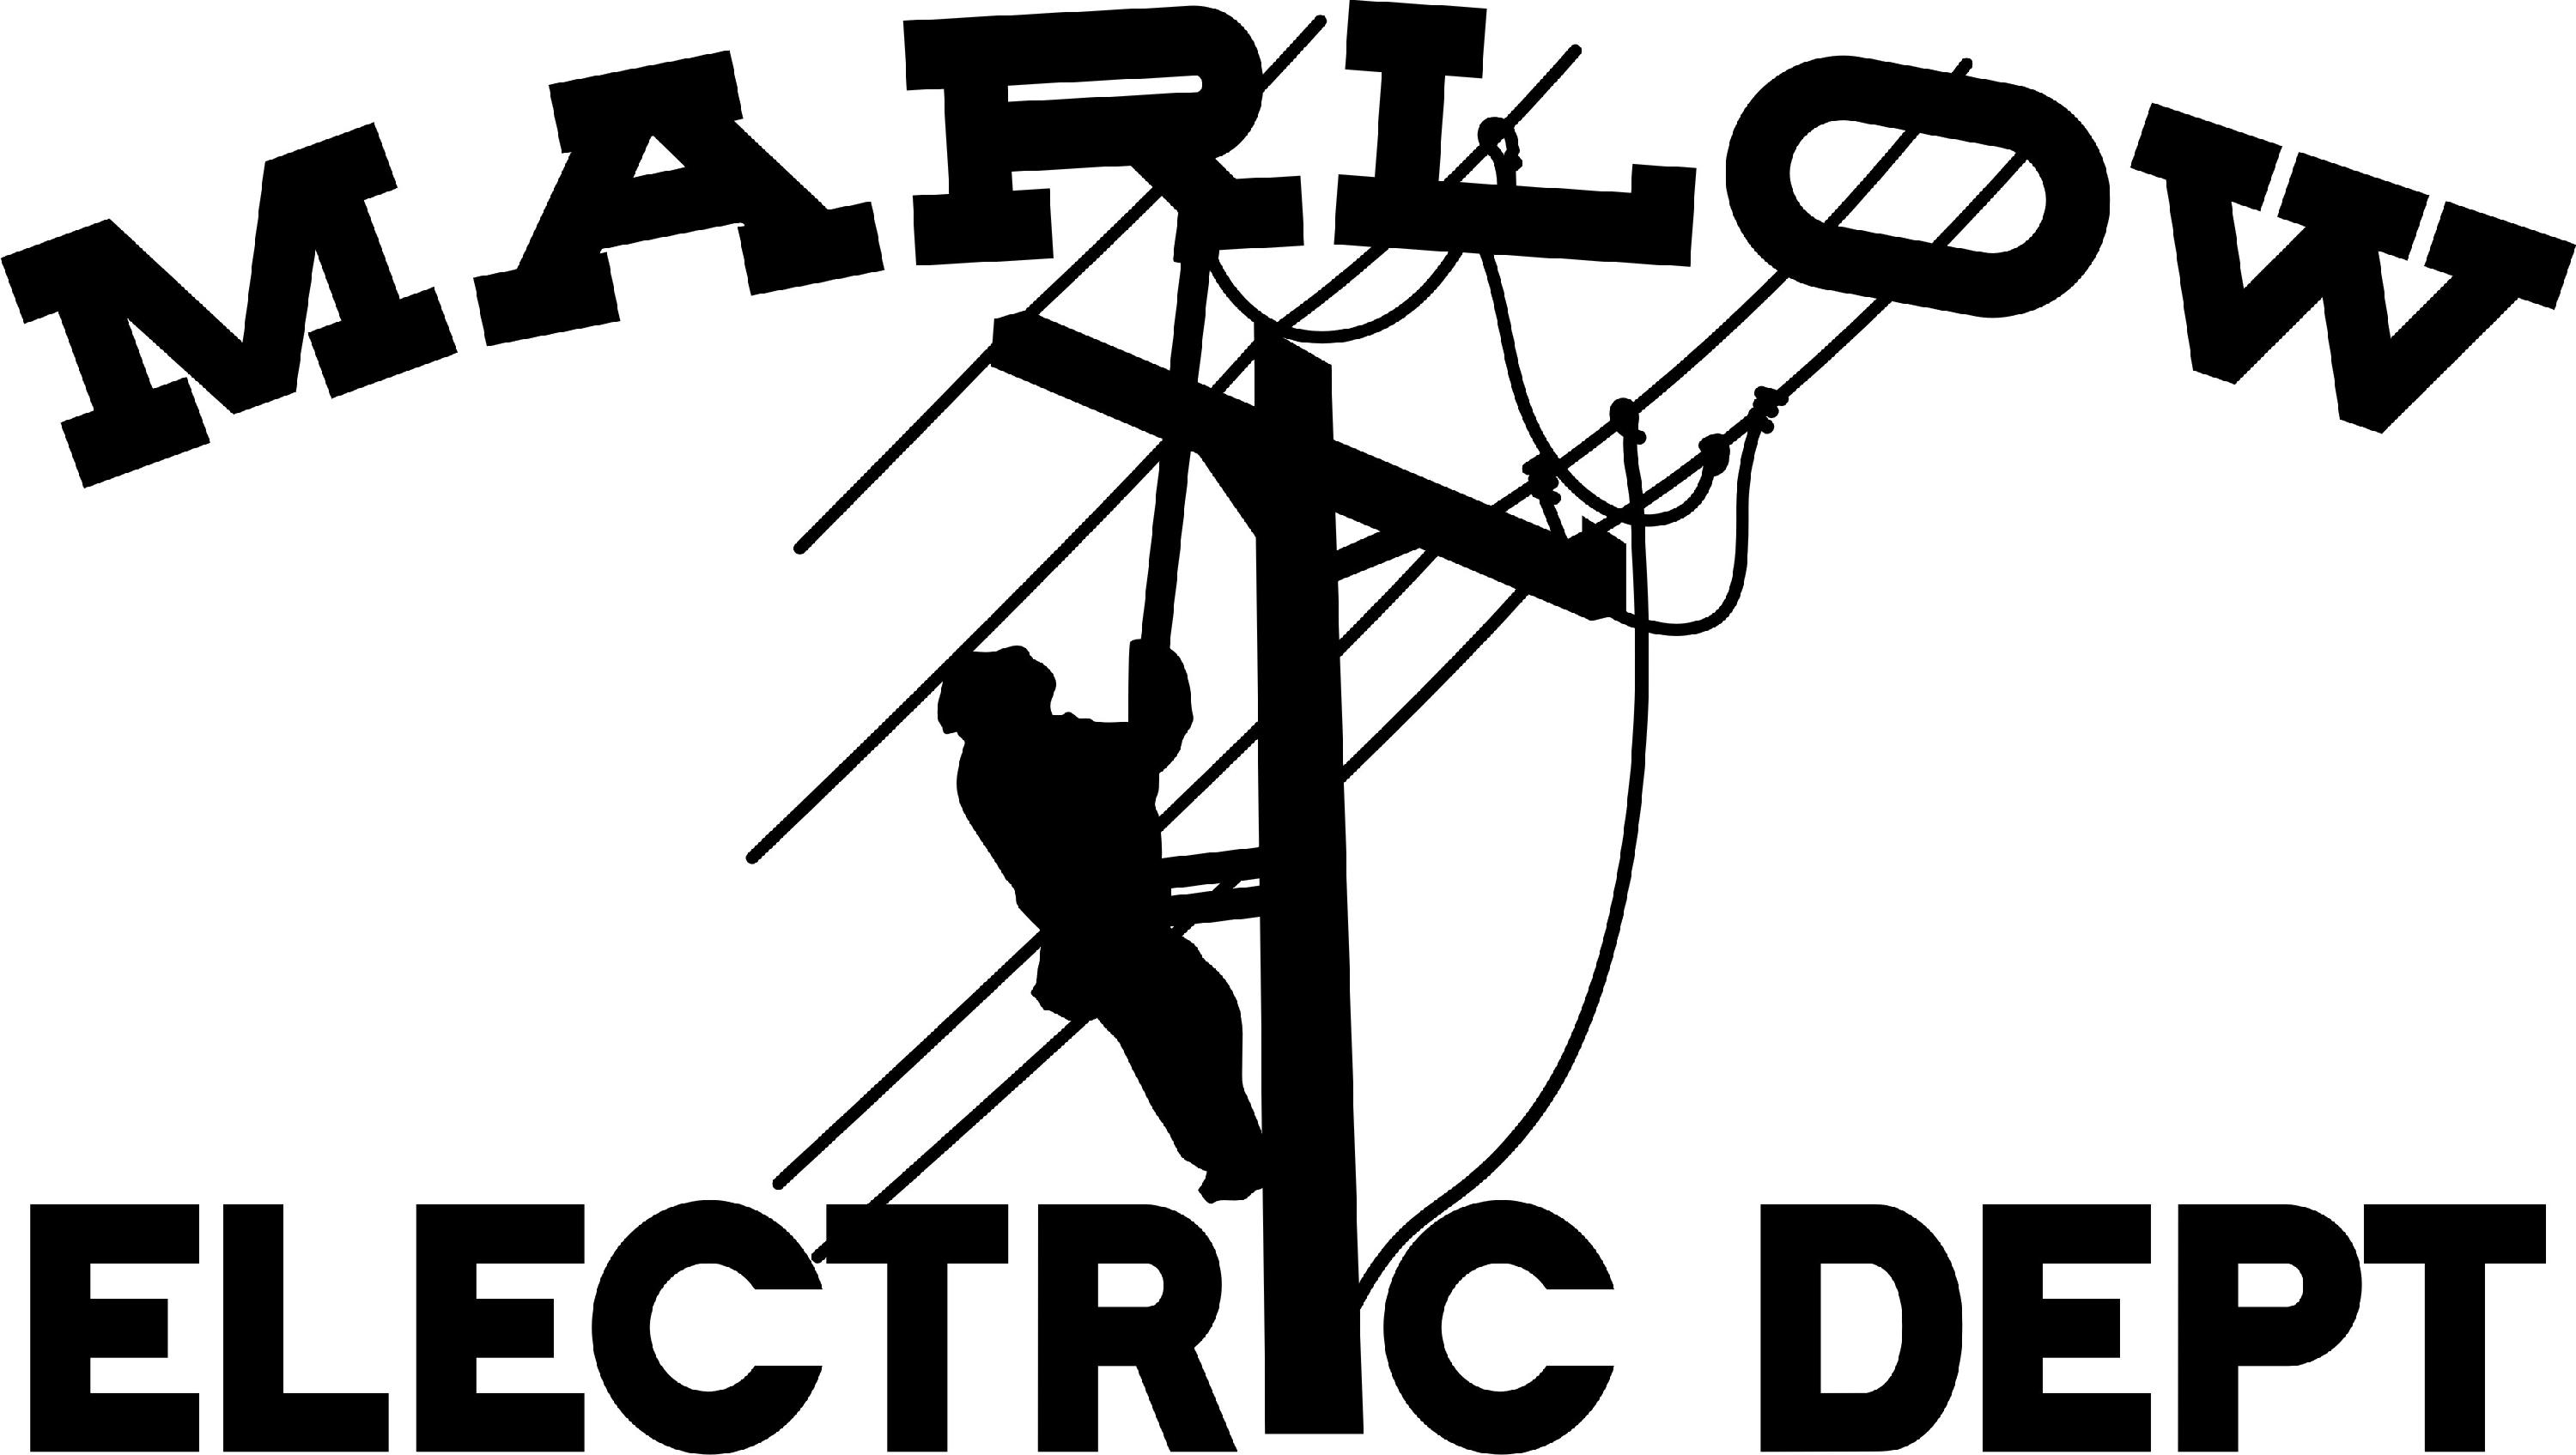 Marlow Electricity logo